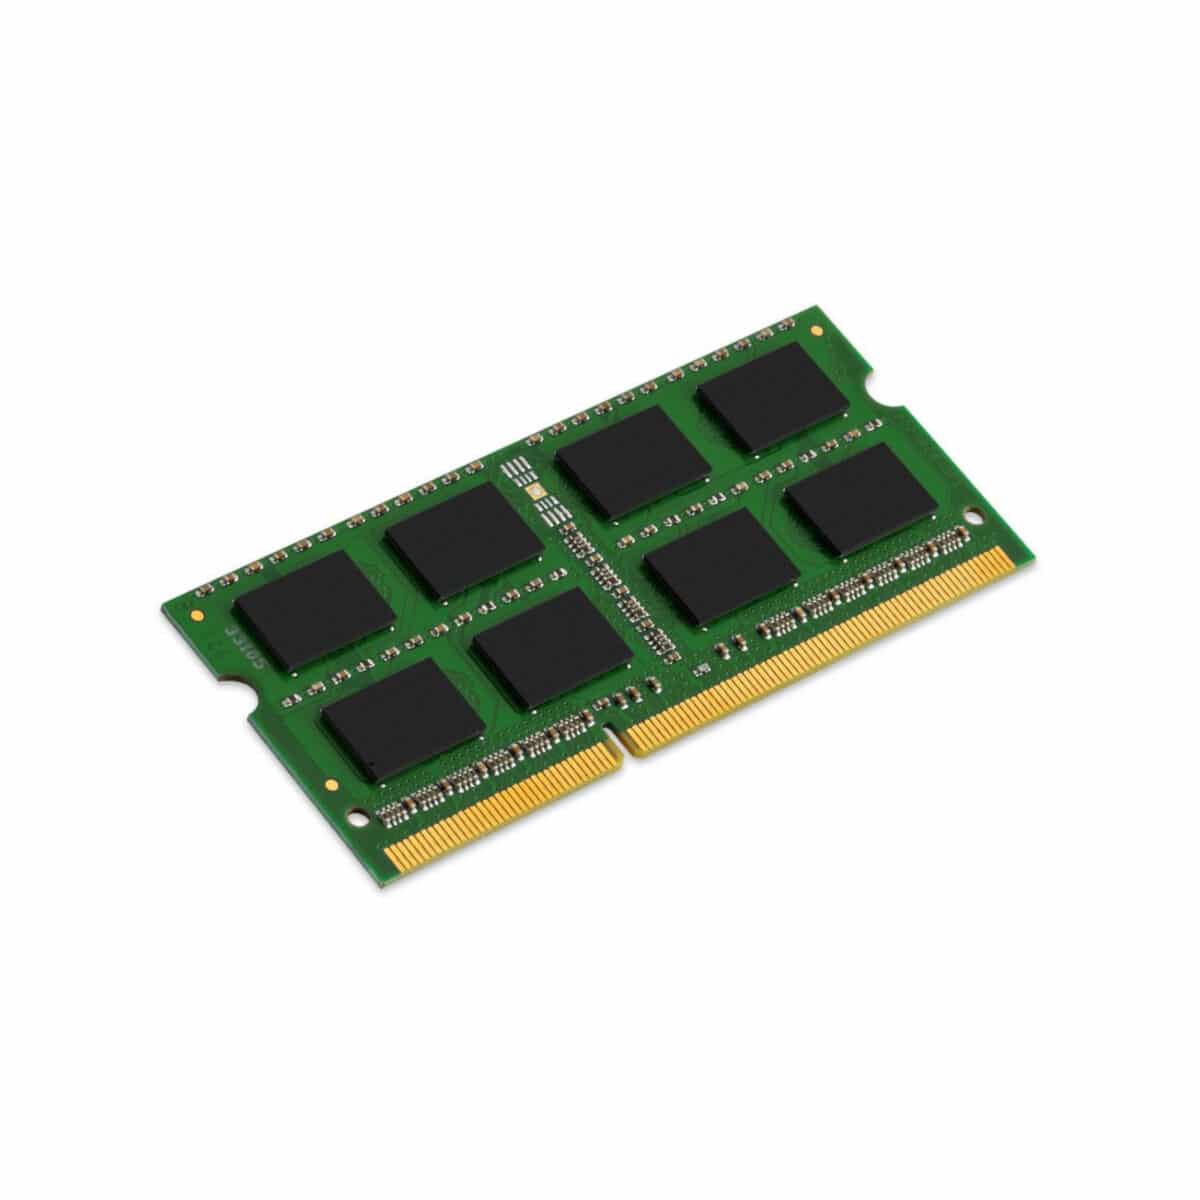 KINGSTON NOTEBOOK MEMORY 8GB 1600MHZ DDR3 SODIMM 1.5V LIMITED LIFETIME WARRANTY